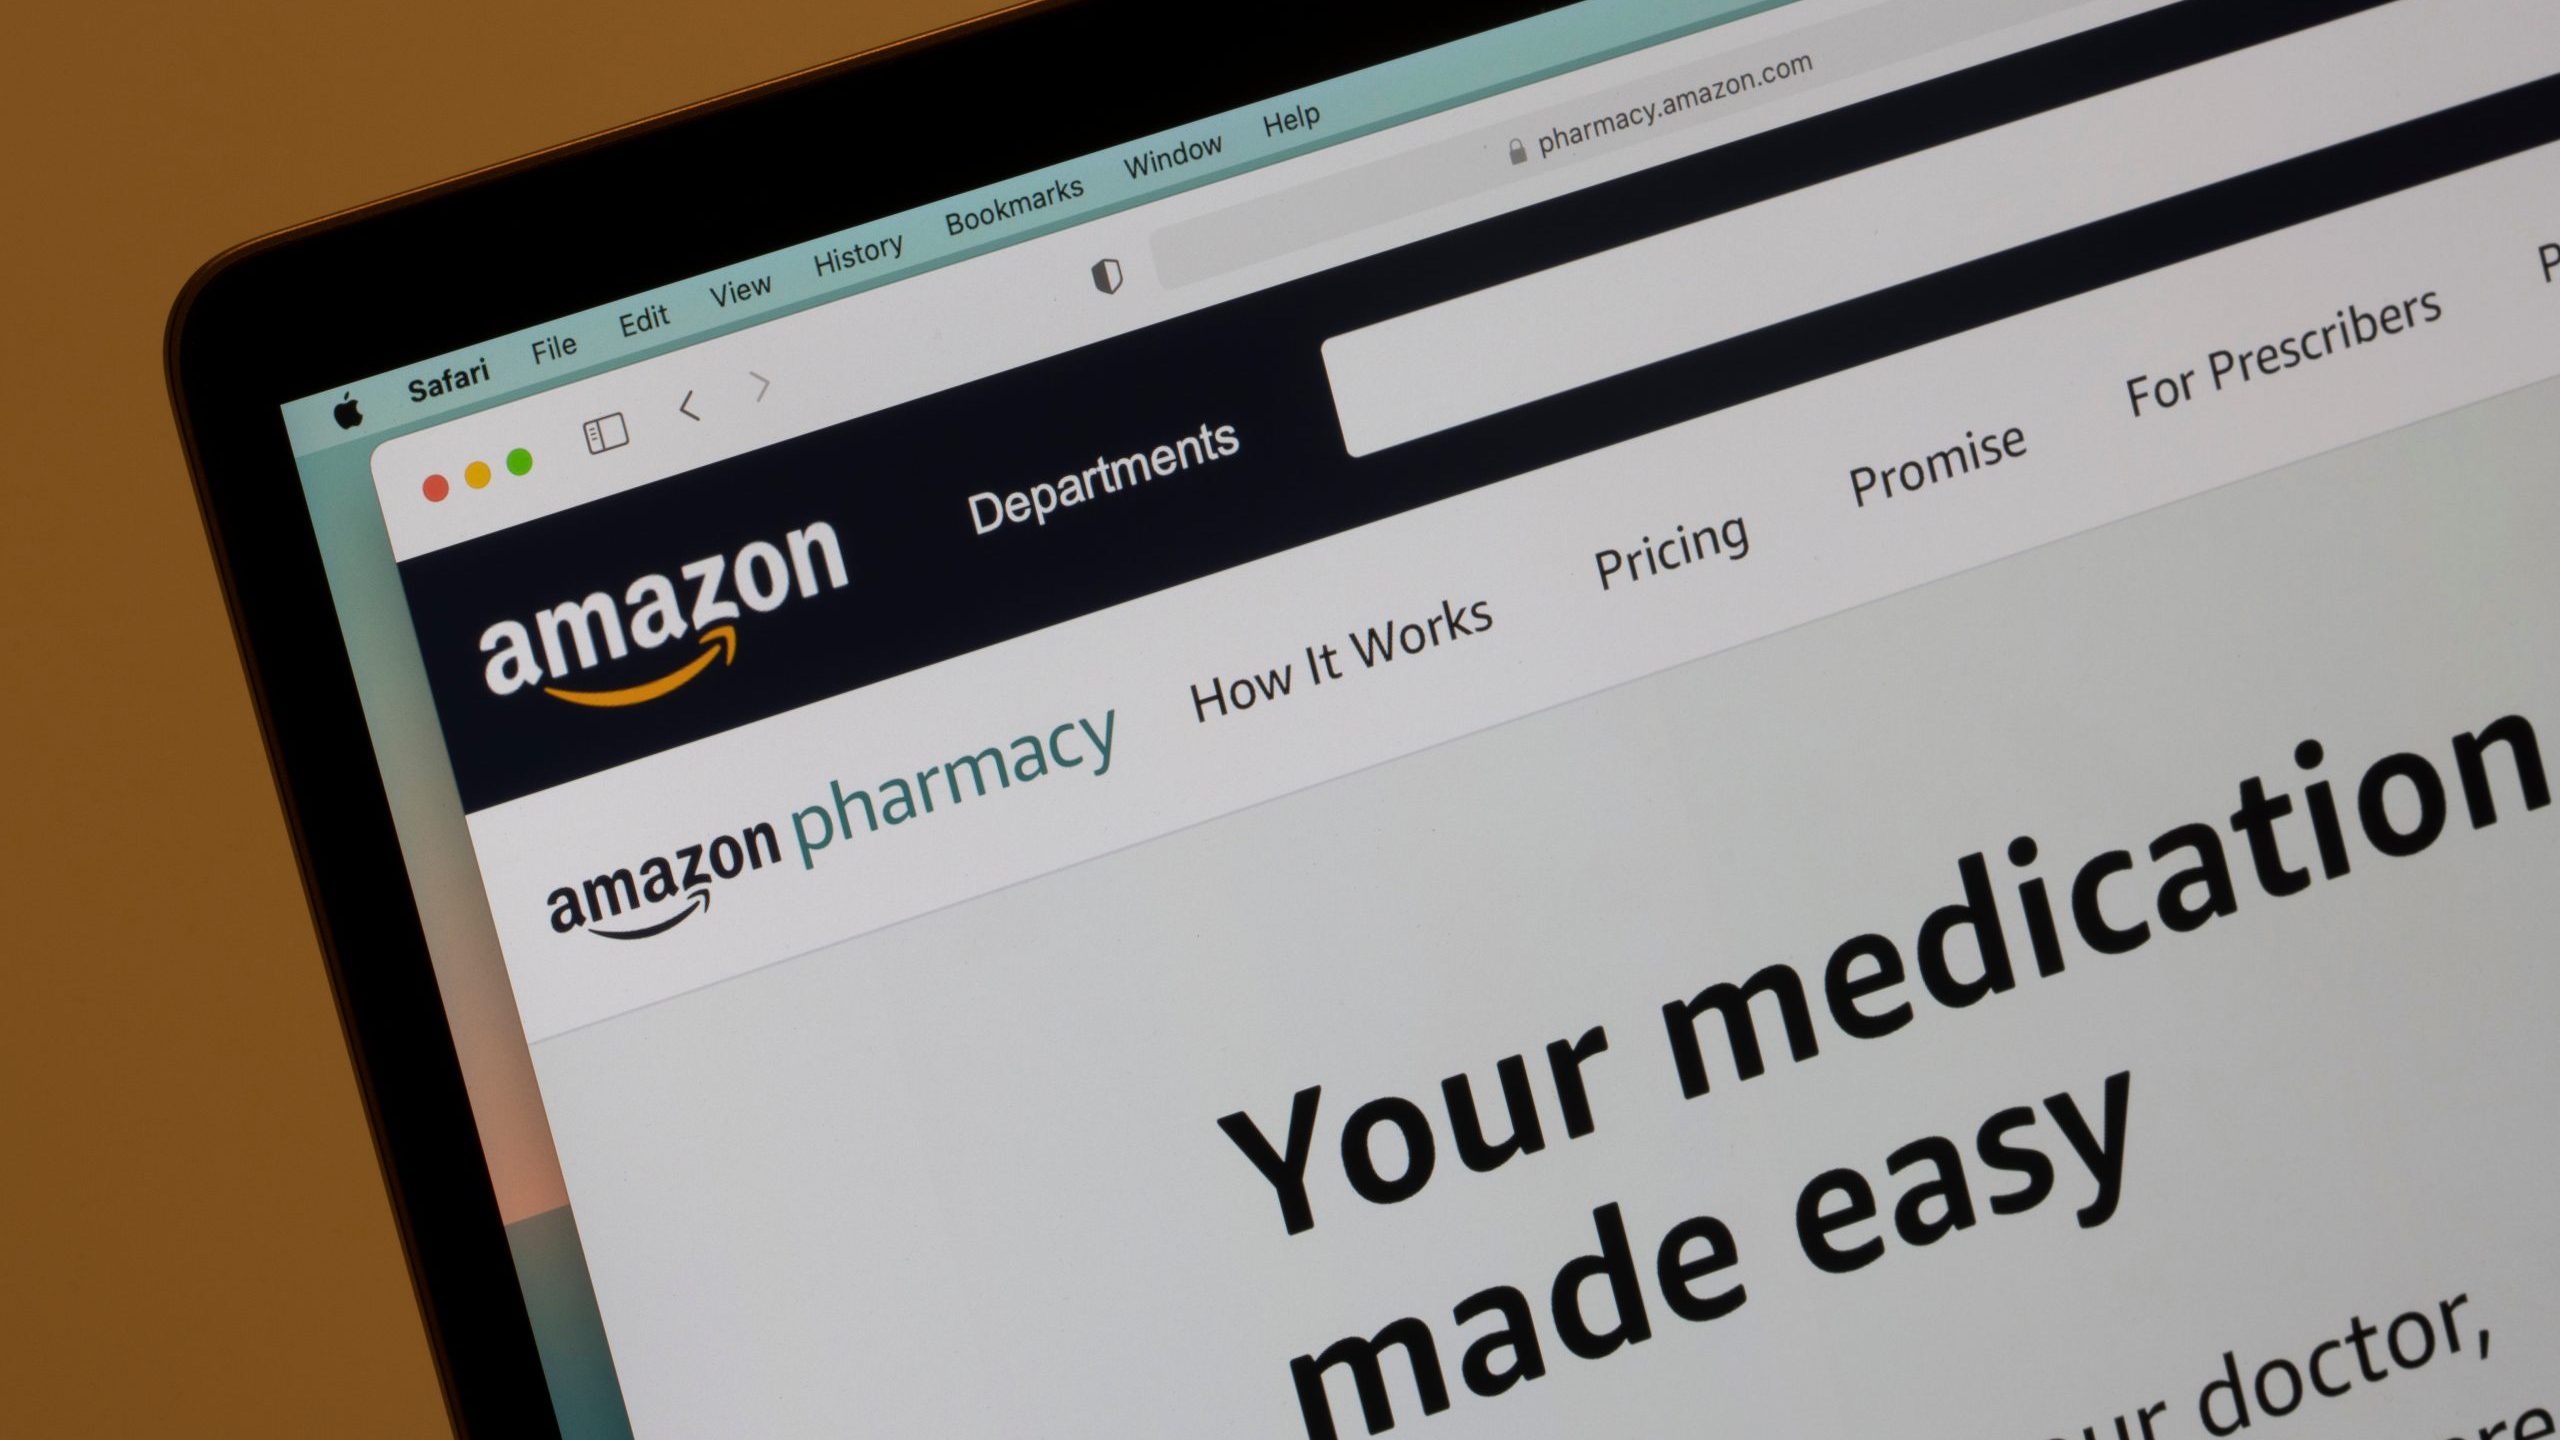 Amazon Pharmacy shown on laptop screen